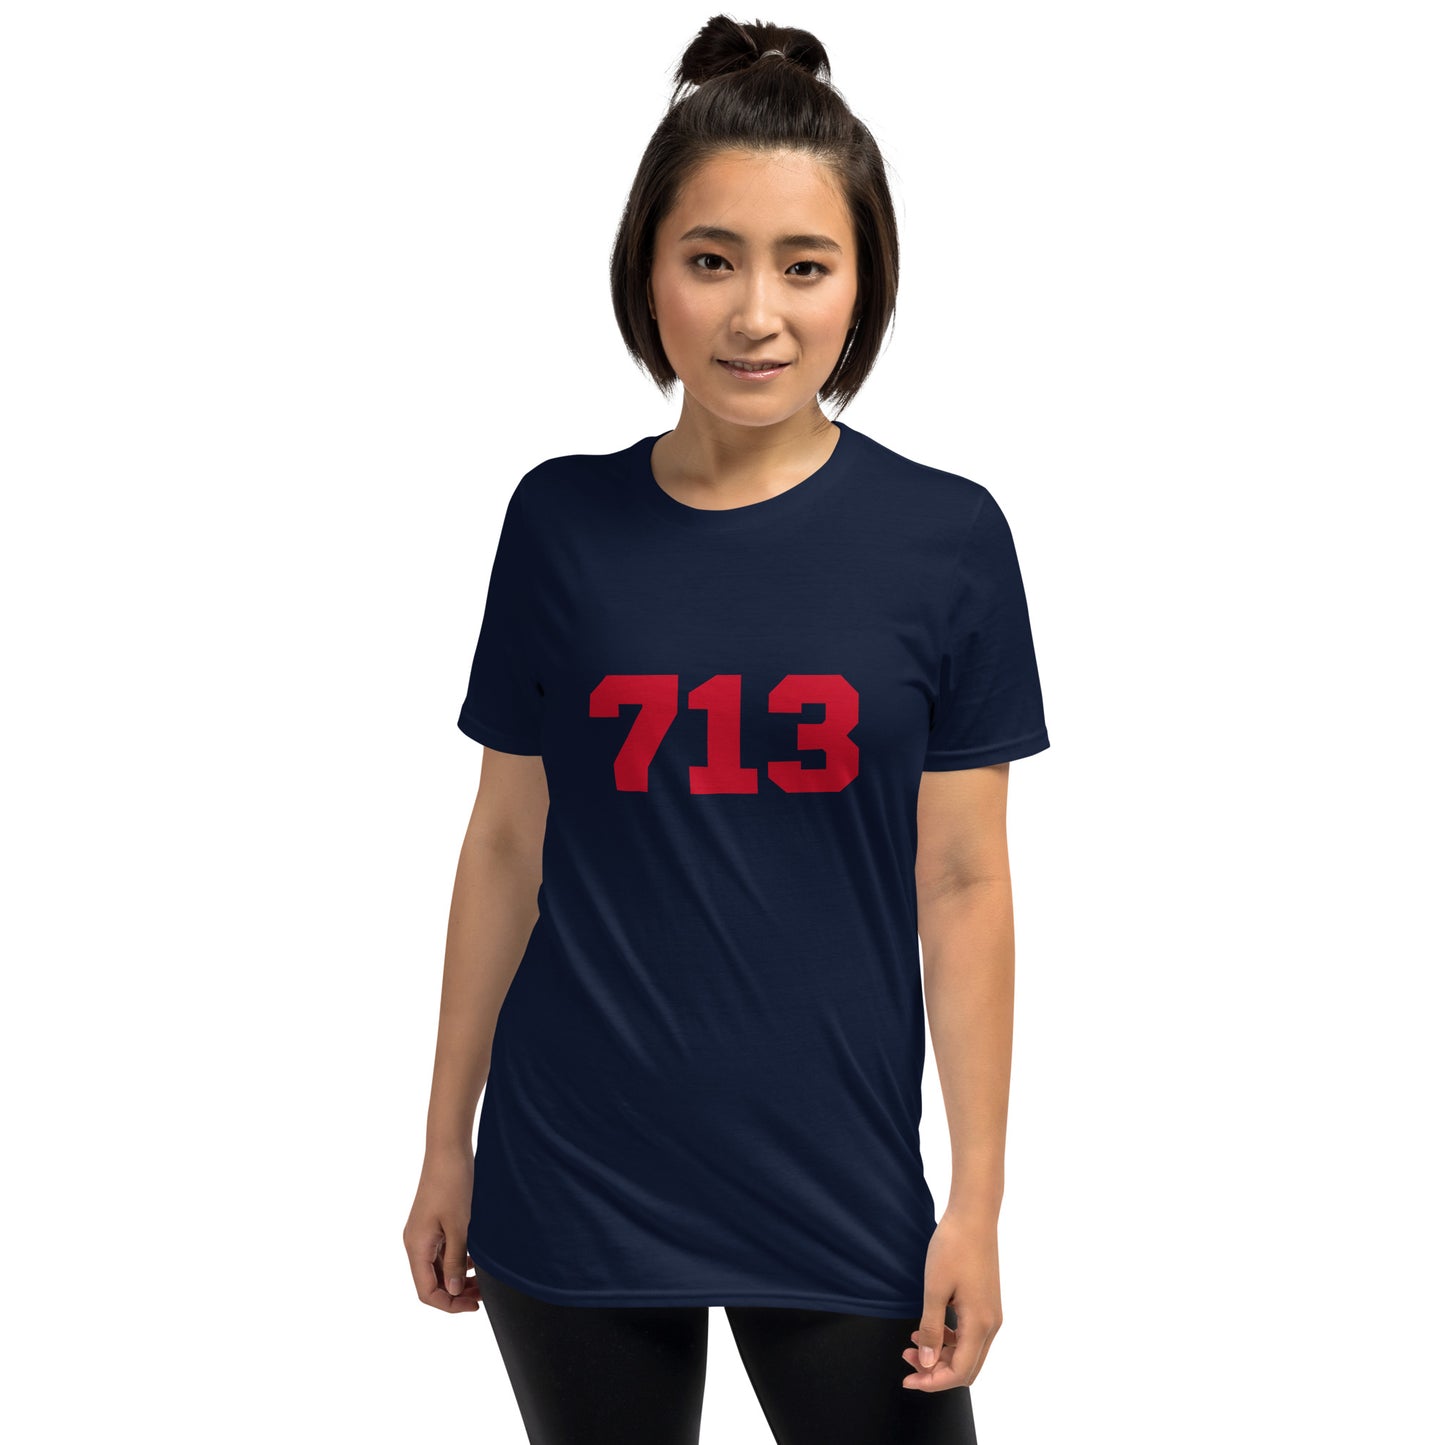 713 Houston Short Sleeve T-Shirt